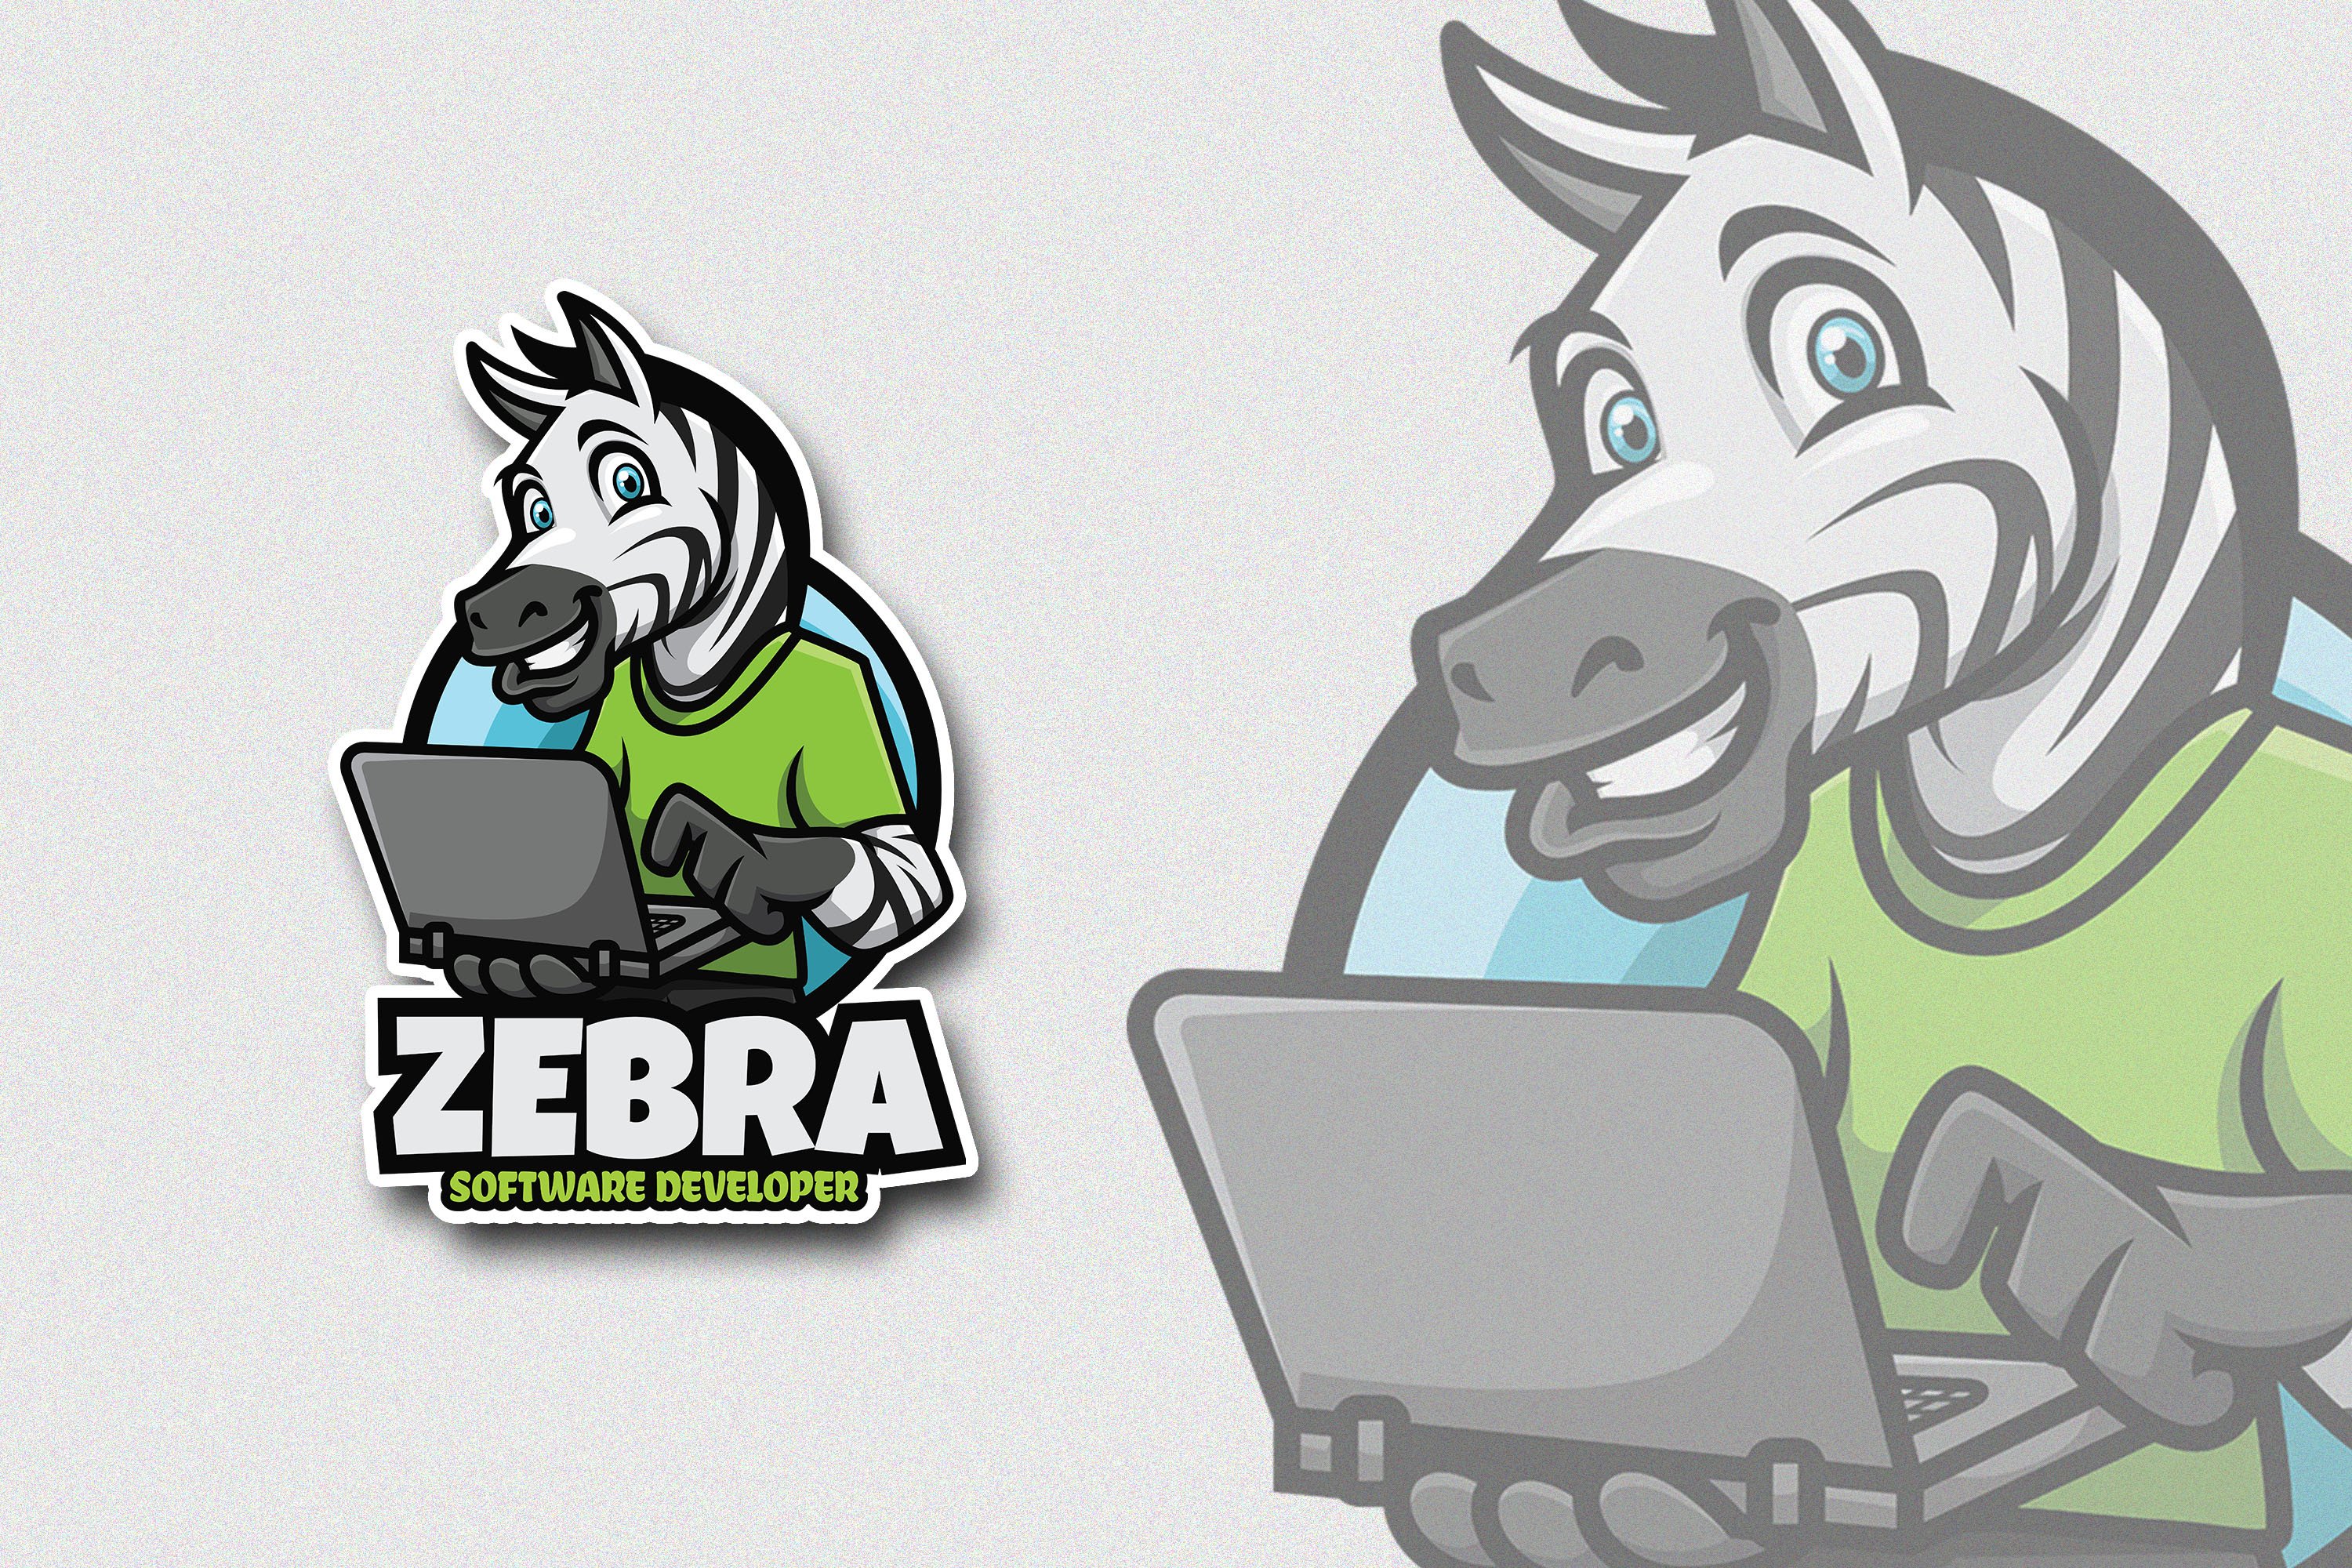 Zebra Software Developer Logo cover image.